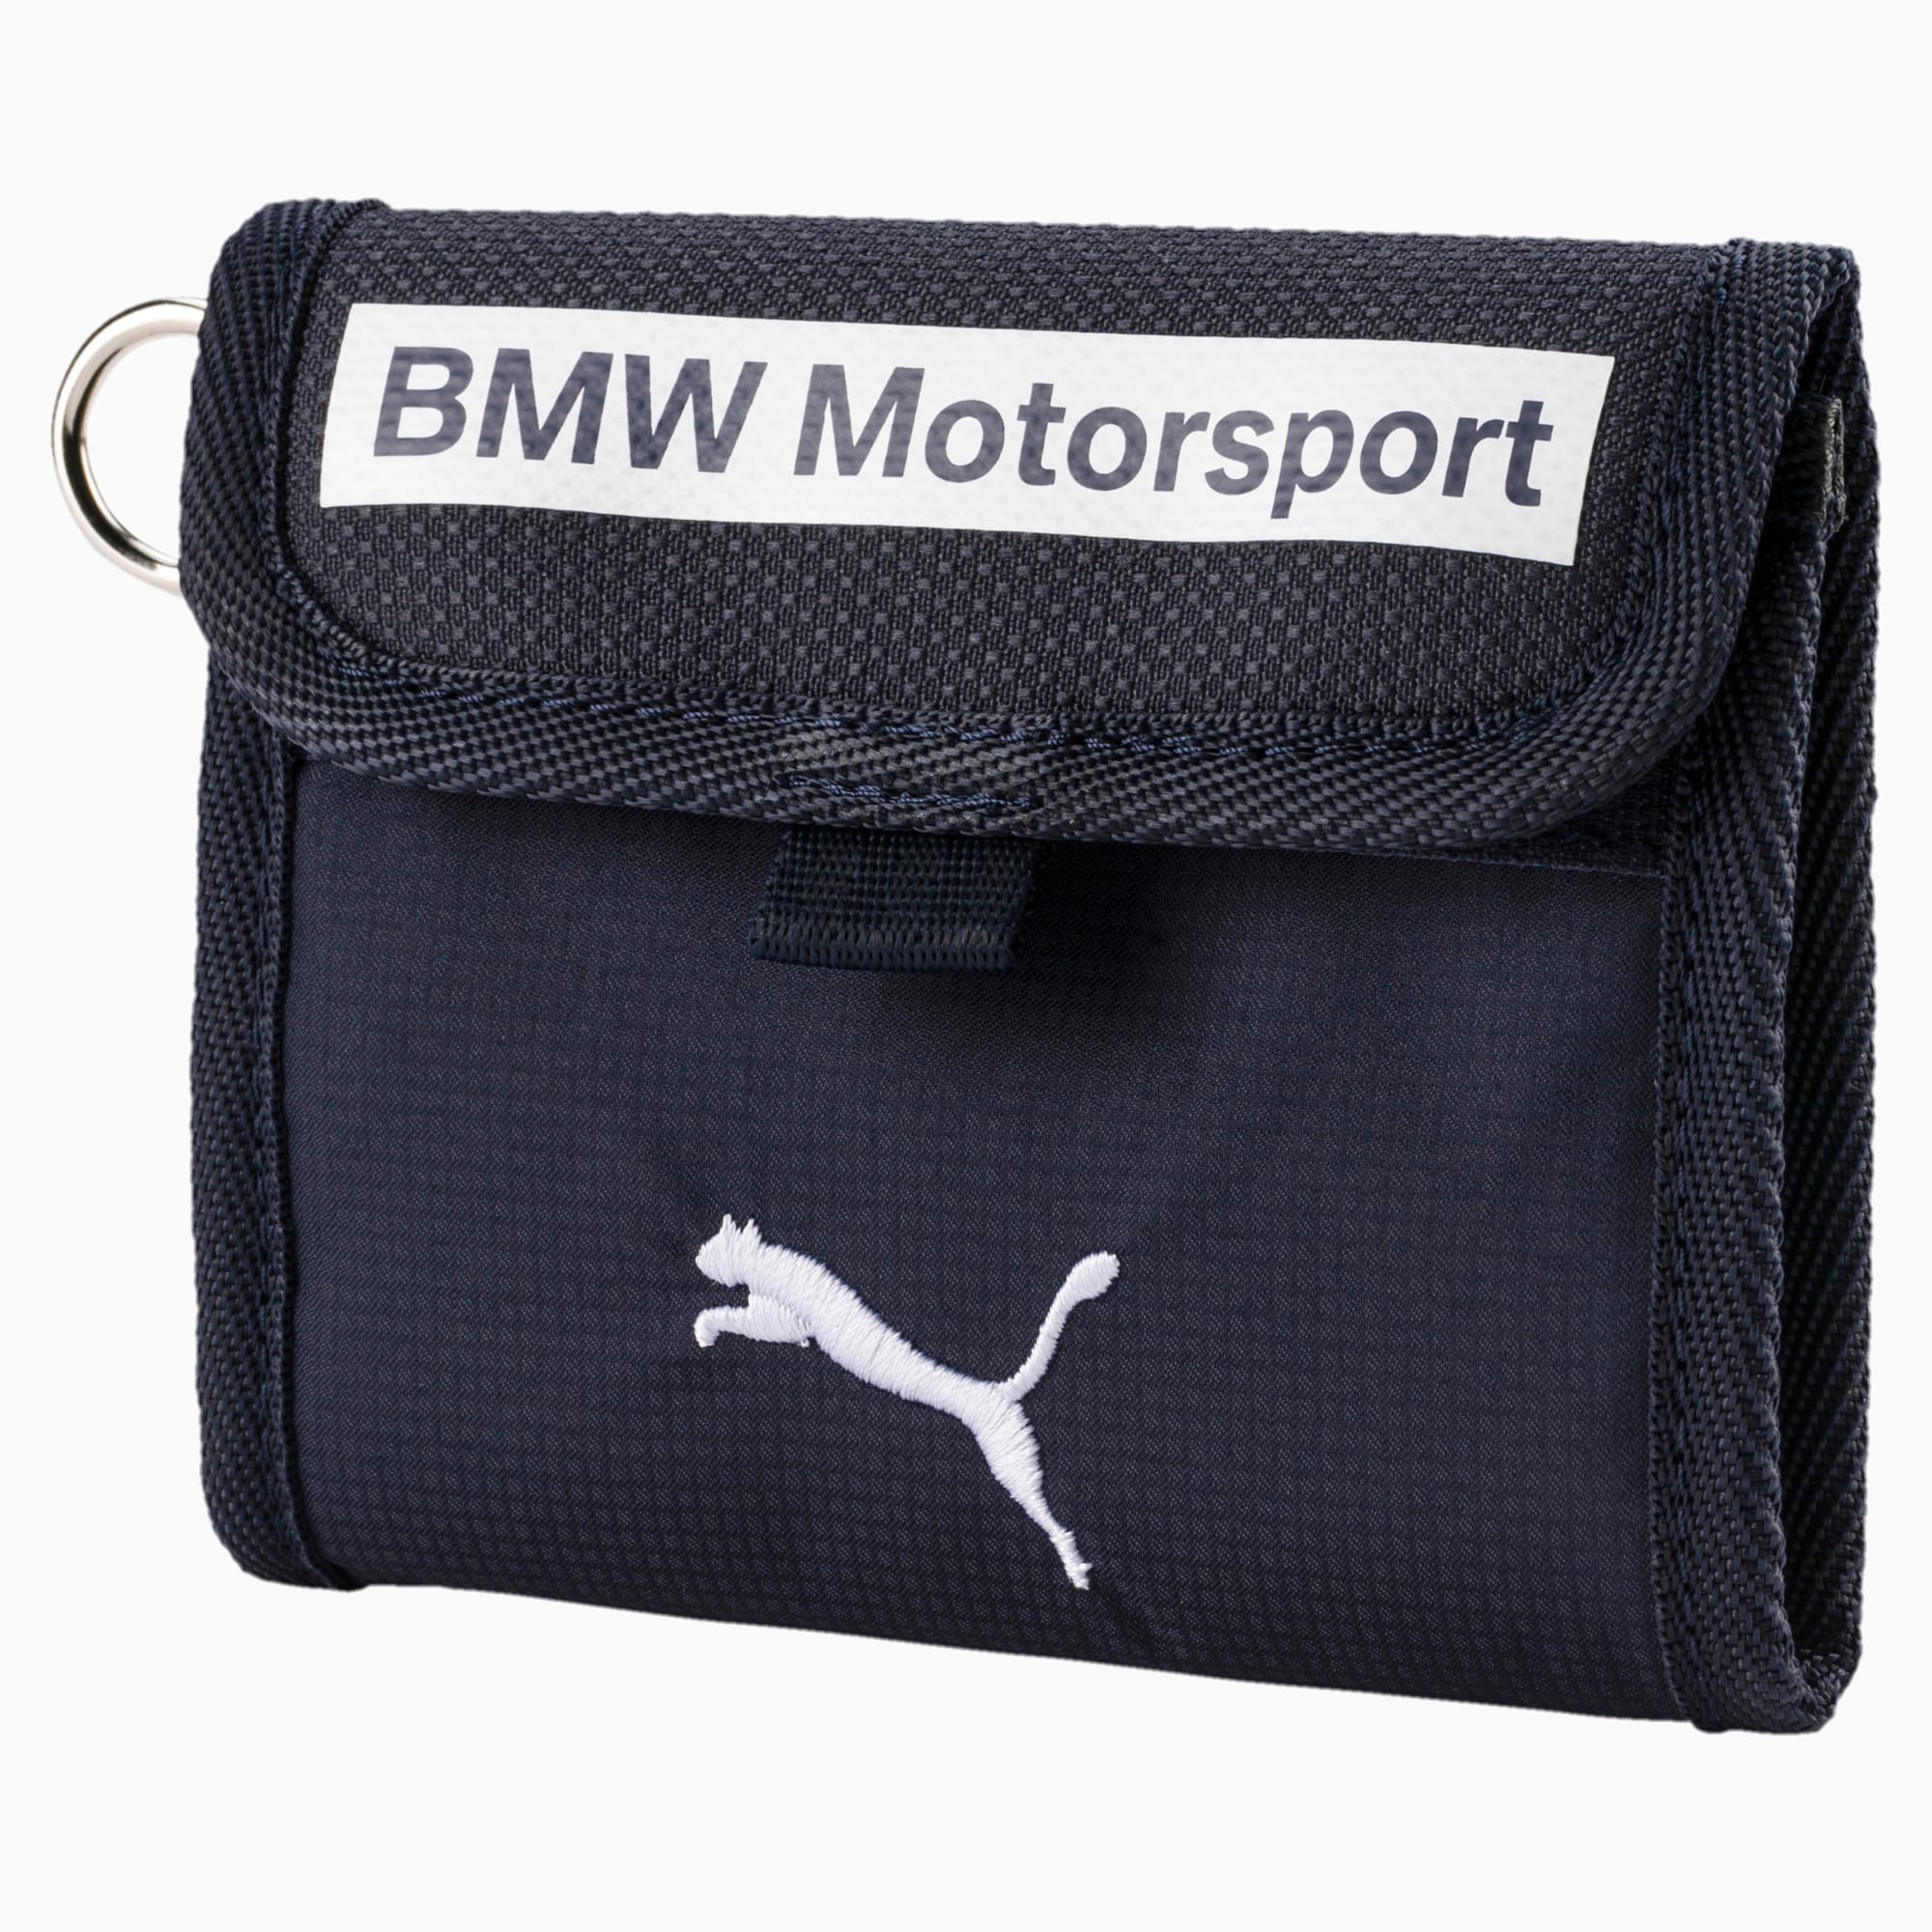 BMW Motorsport Wallet | PUMA US